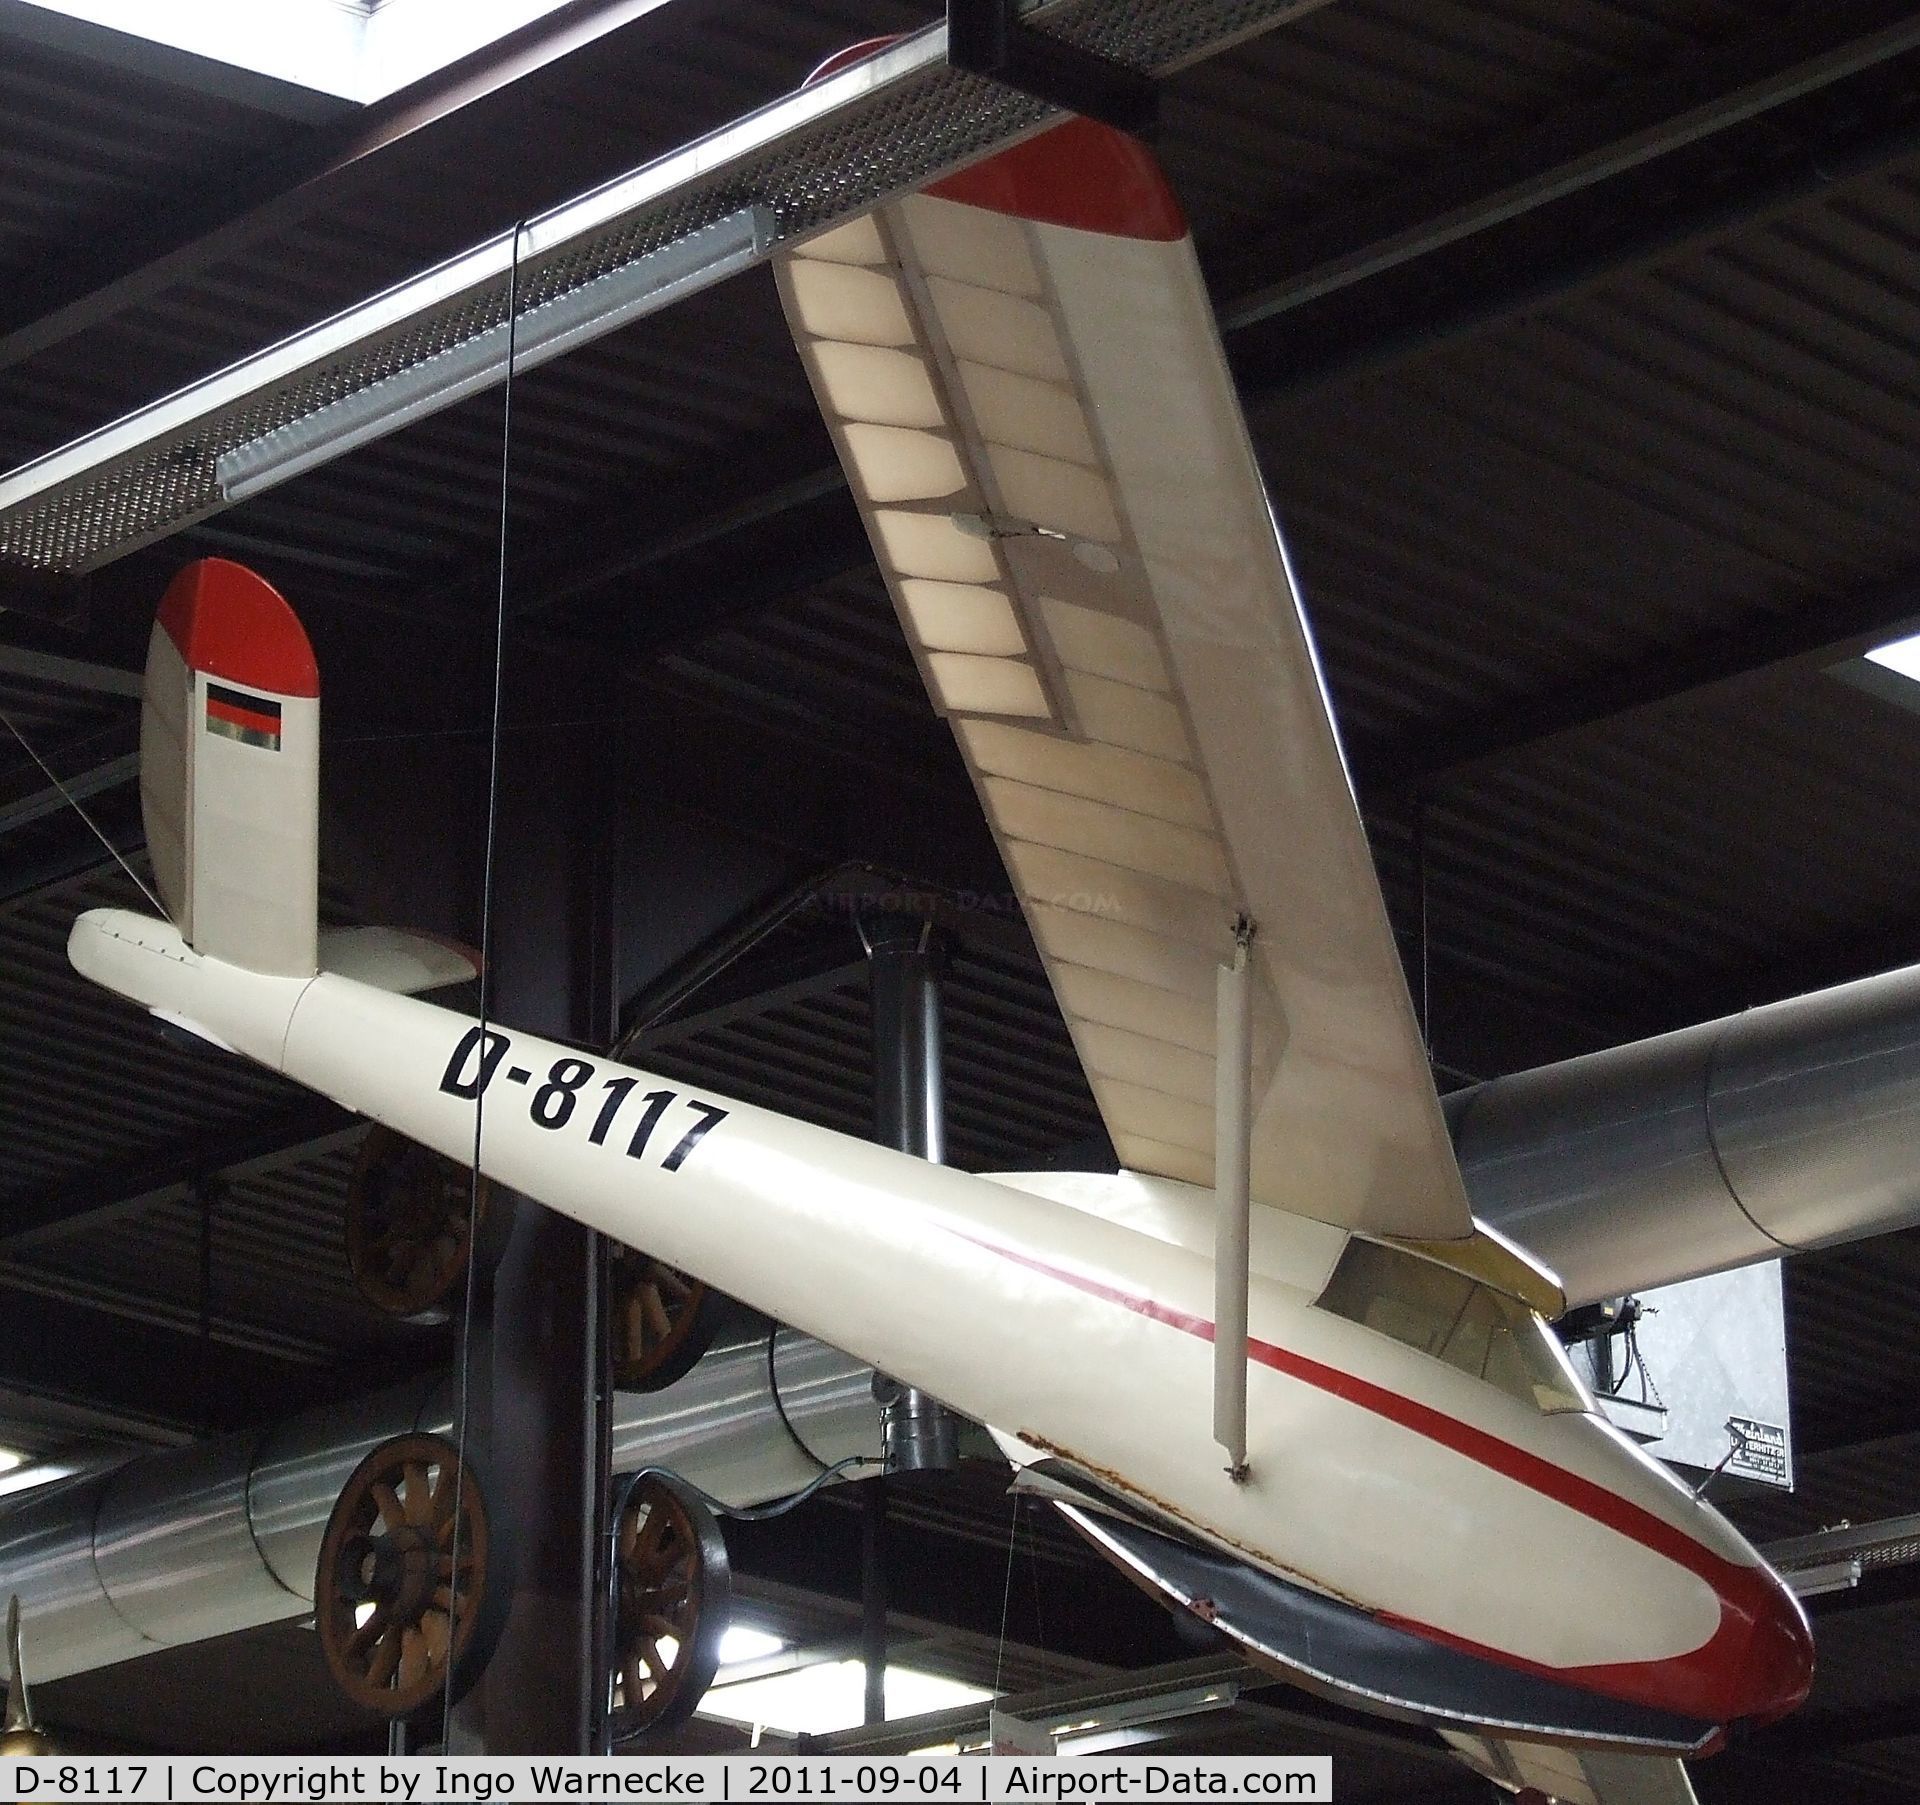 D-8117, Schleicher Ka-1 C/N Not found D-8117, Schleicher Ka-1 at the Auto & Technik Museum, Sinsheim